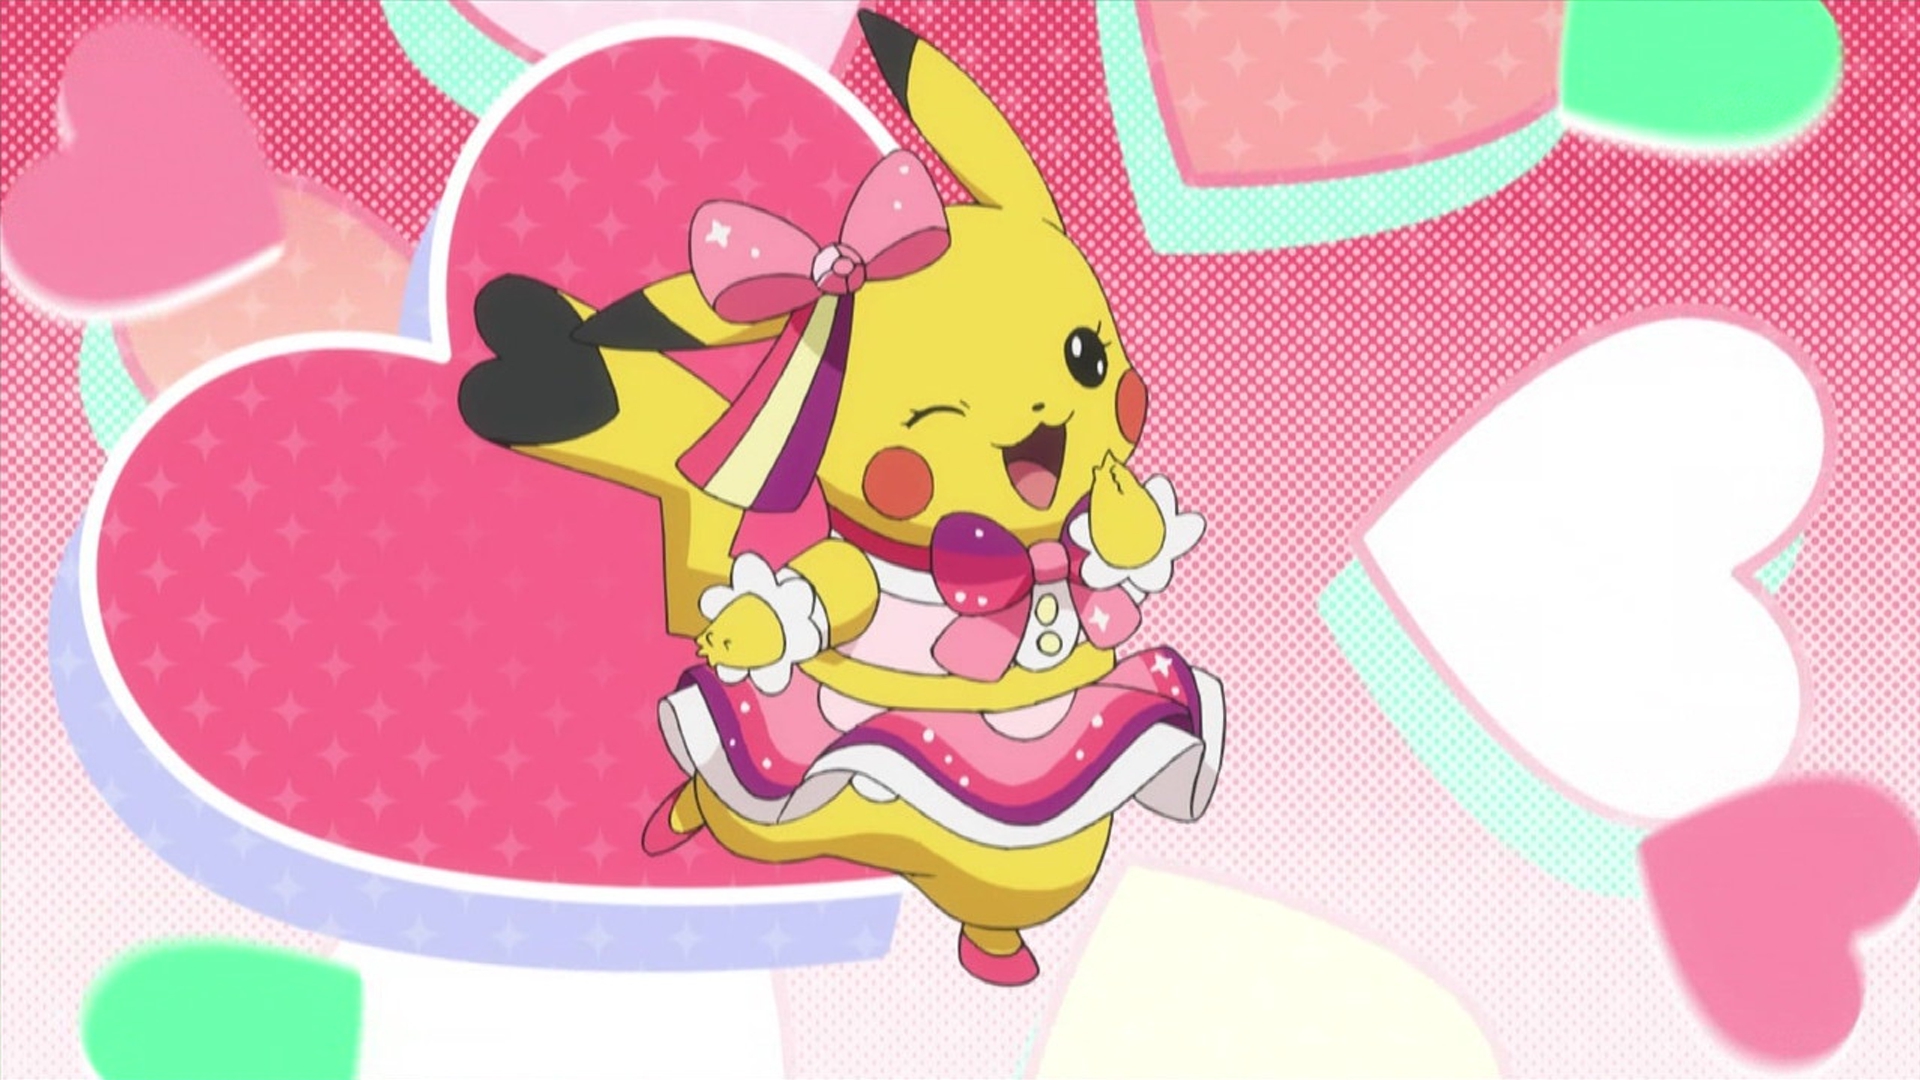 My Favorite Pokemon Ranked By Cuteness. Cutest Pokemon Ranked